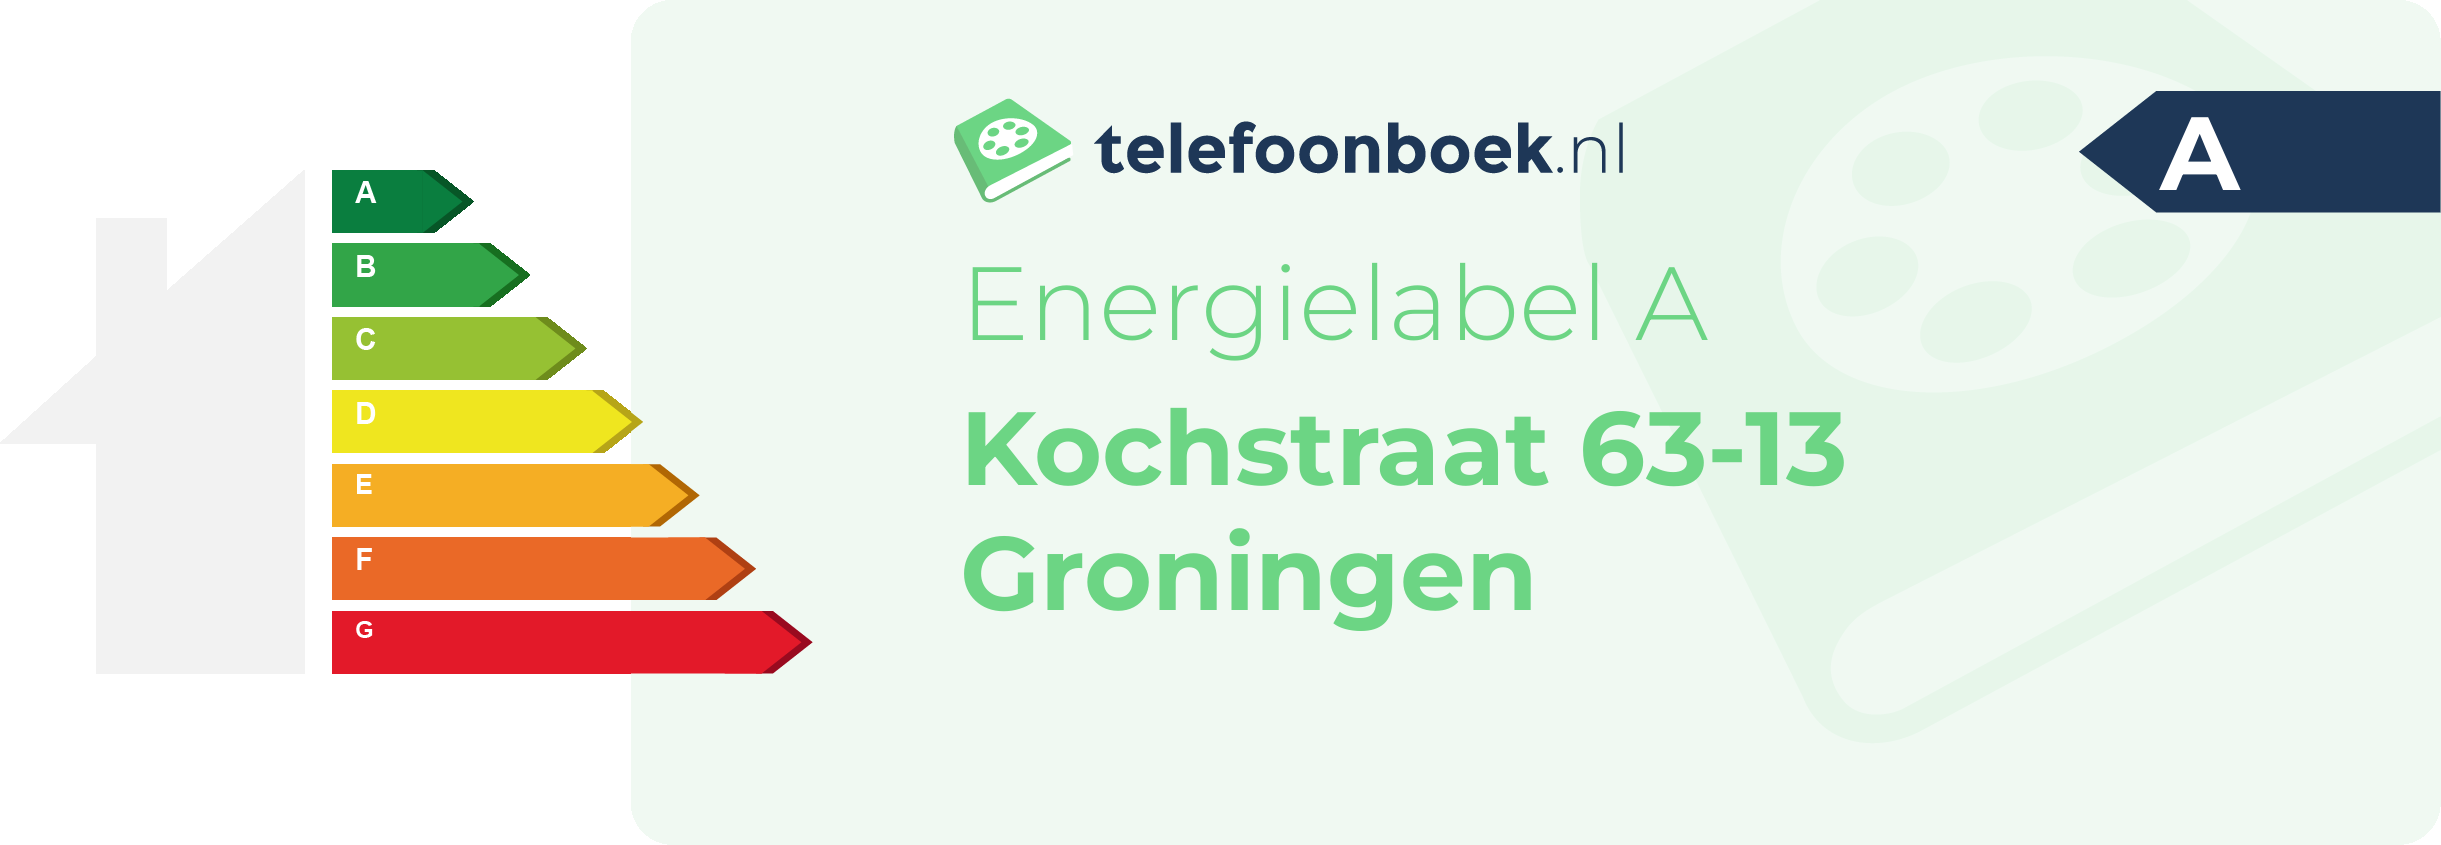 Energielabel Kochstraat 63-13 Groningen